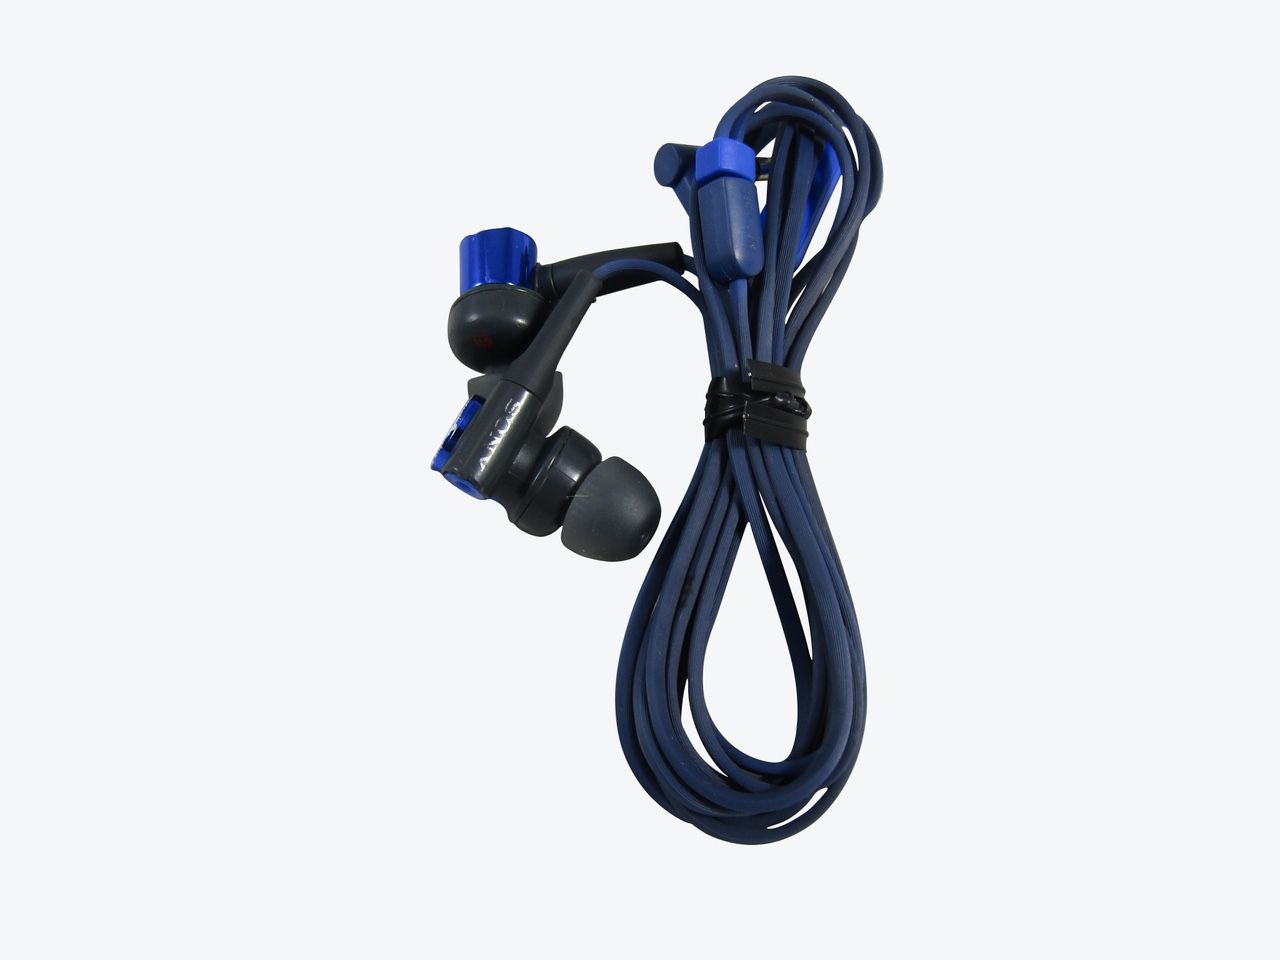 Sony MDRXB50 Wired Earbud Headphones Blue AC